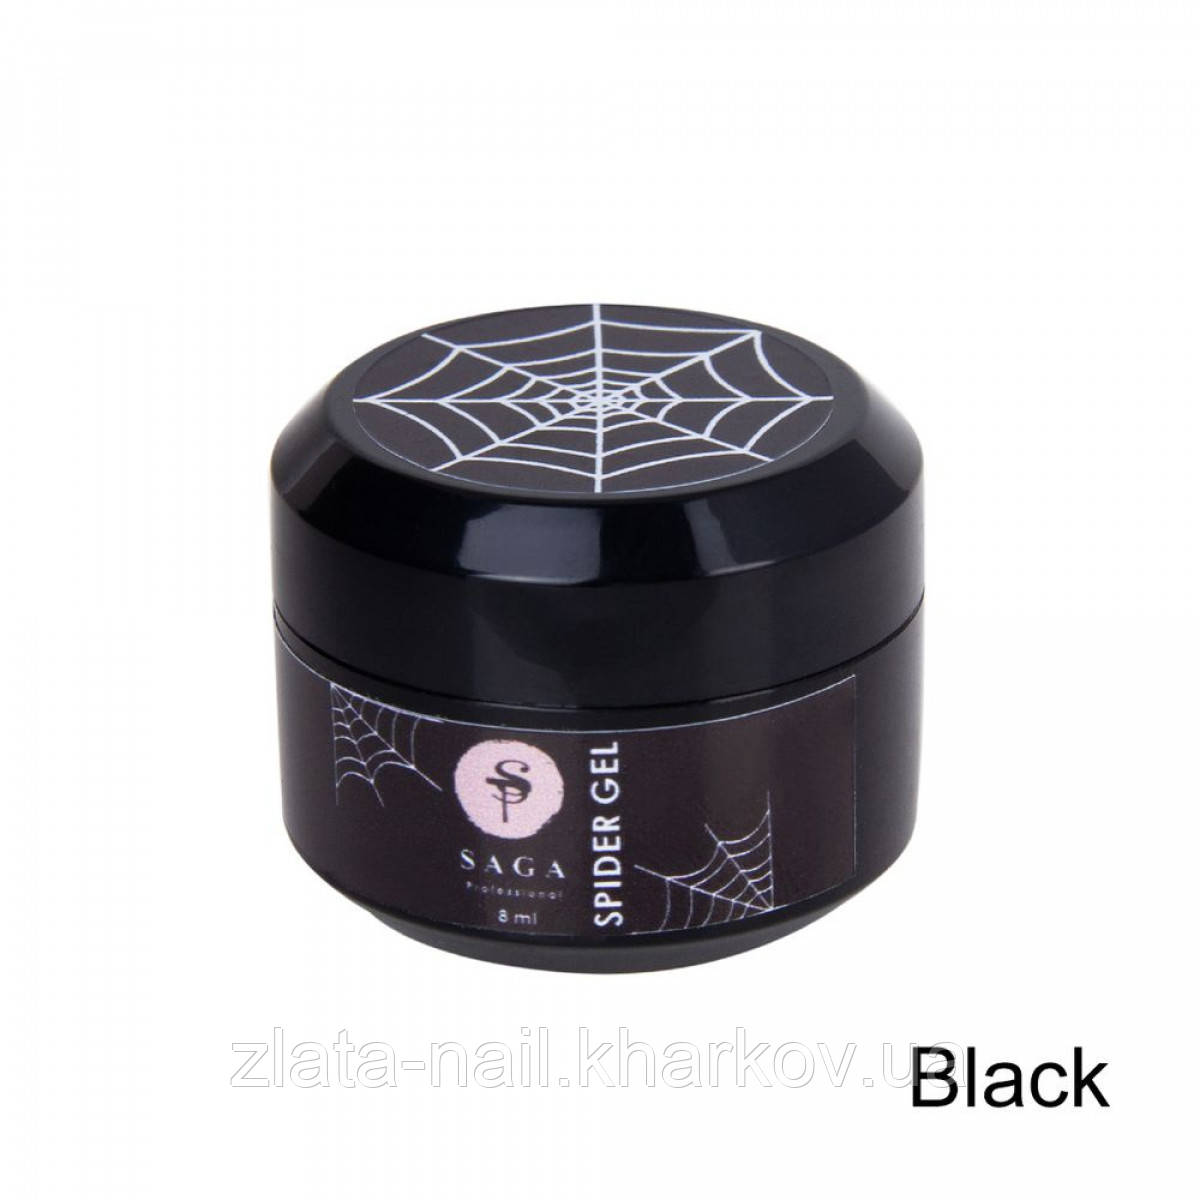 Гель-павутинка Saga Professional Spider Black, 8 мл